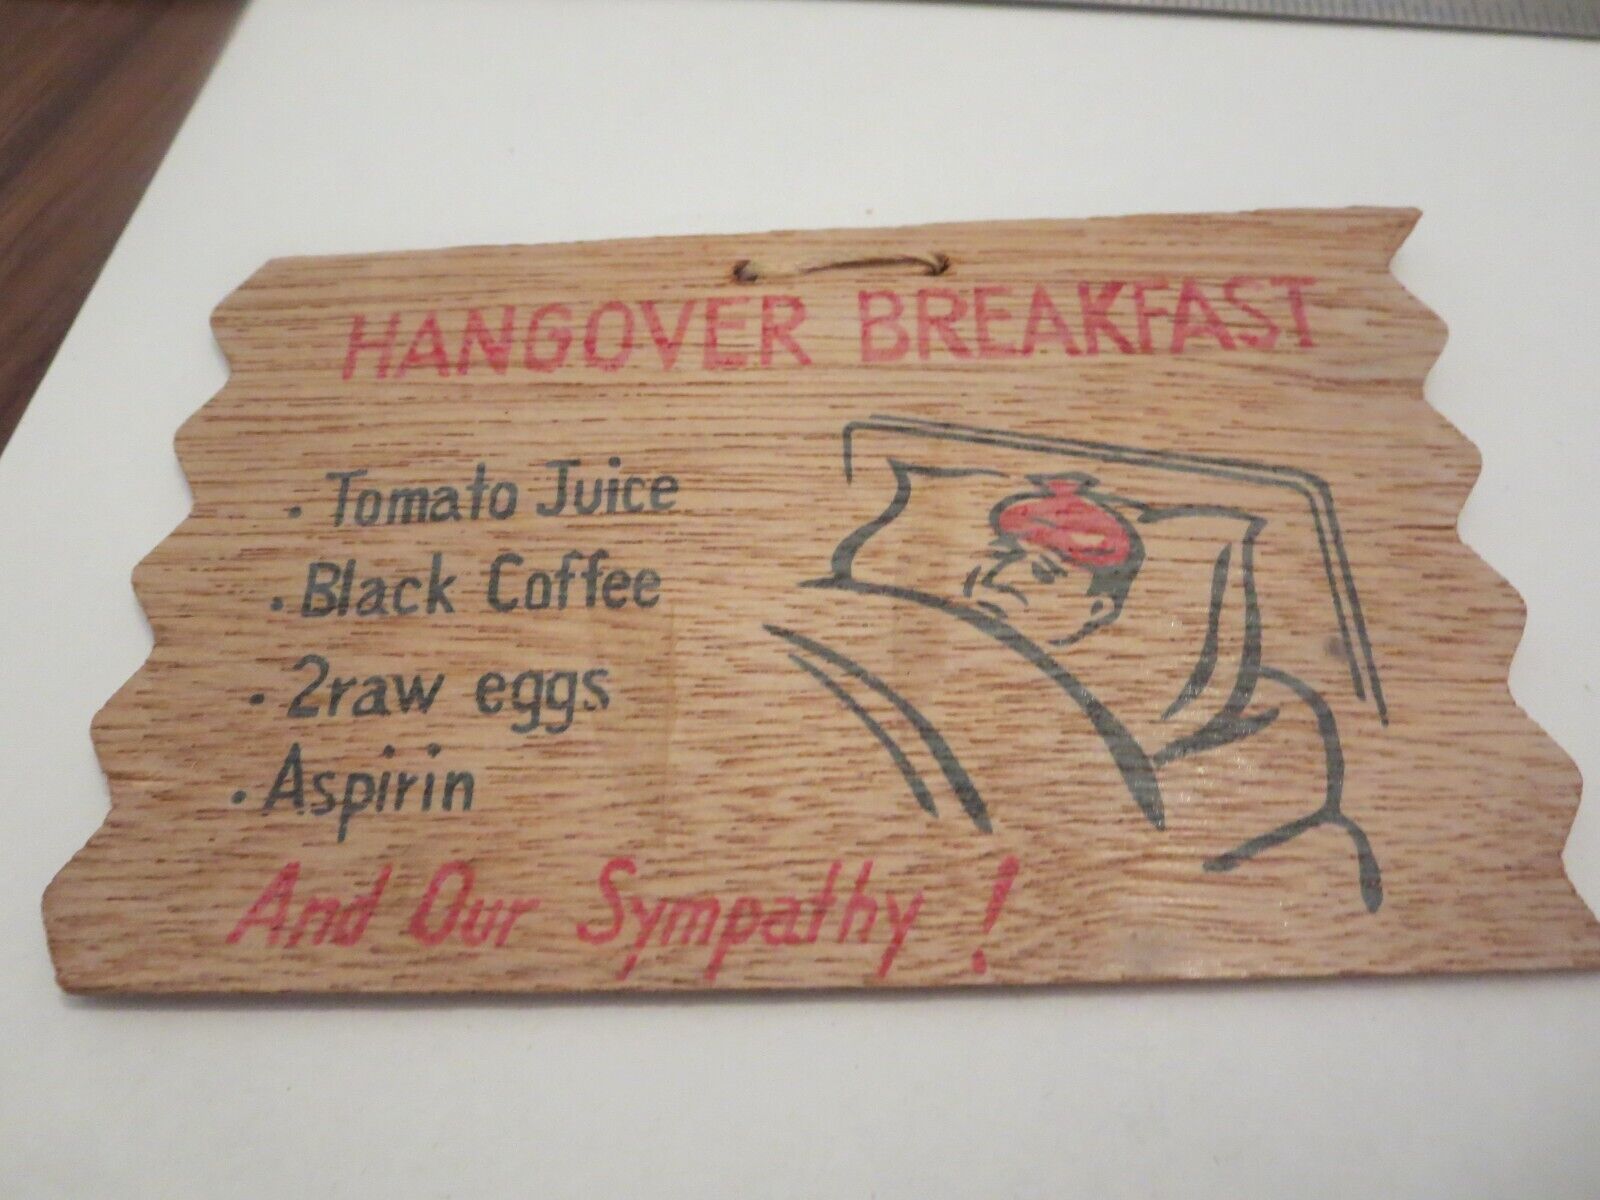 Vintage Wood Postcard- Handover Breakfast